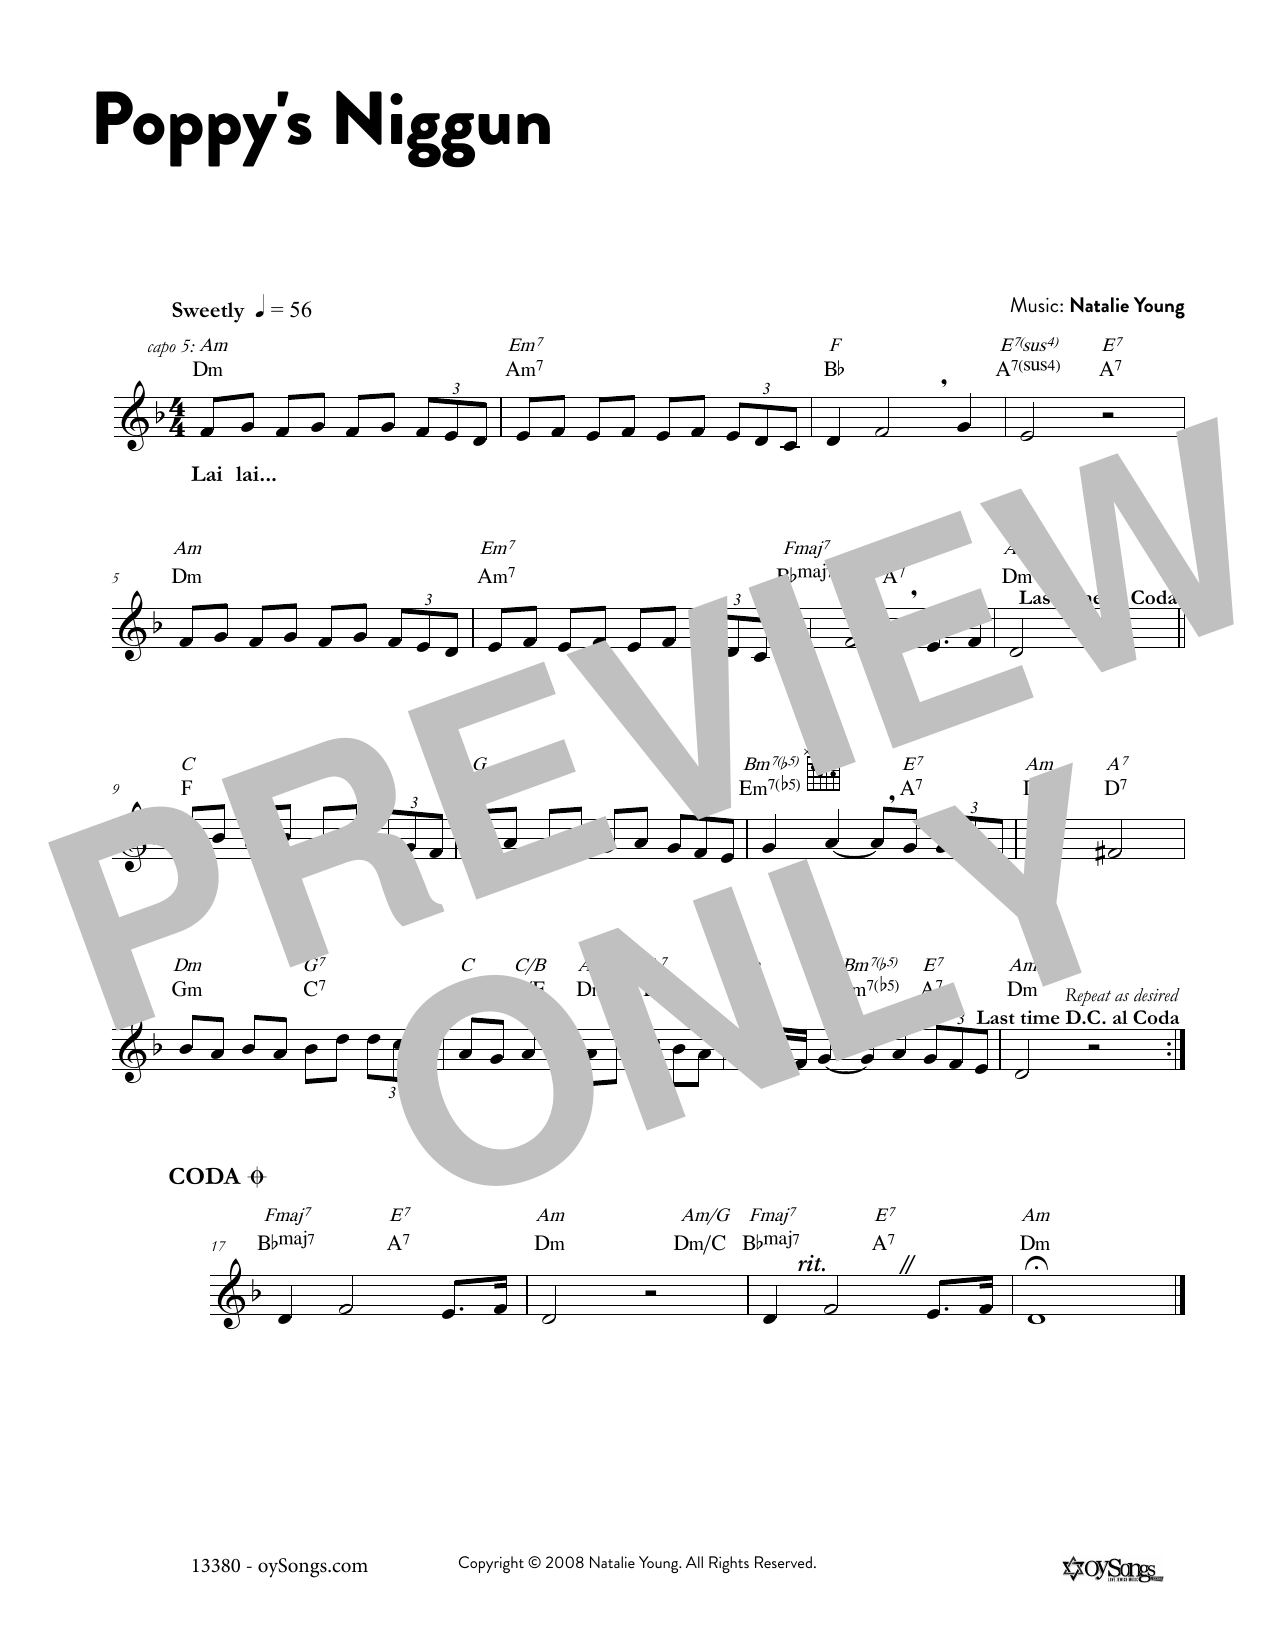 Natalie Young Poppy's Niggun Sheet Music Notes & Chords for Melody Line, Lyrics & Chords - Download or Print PDF